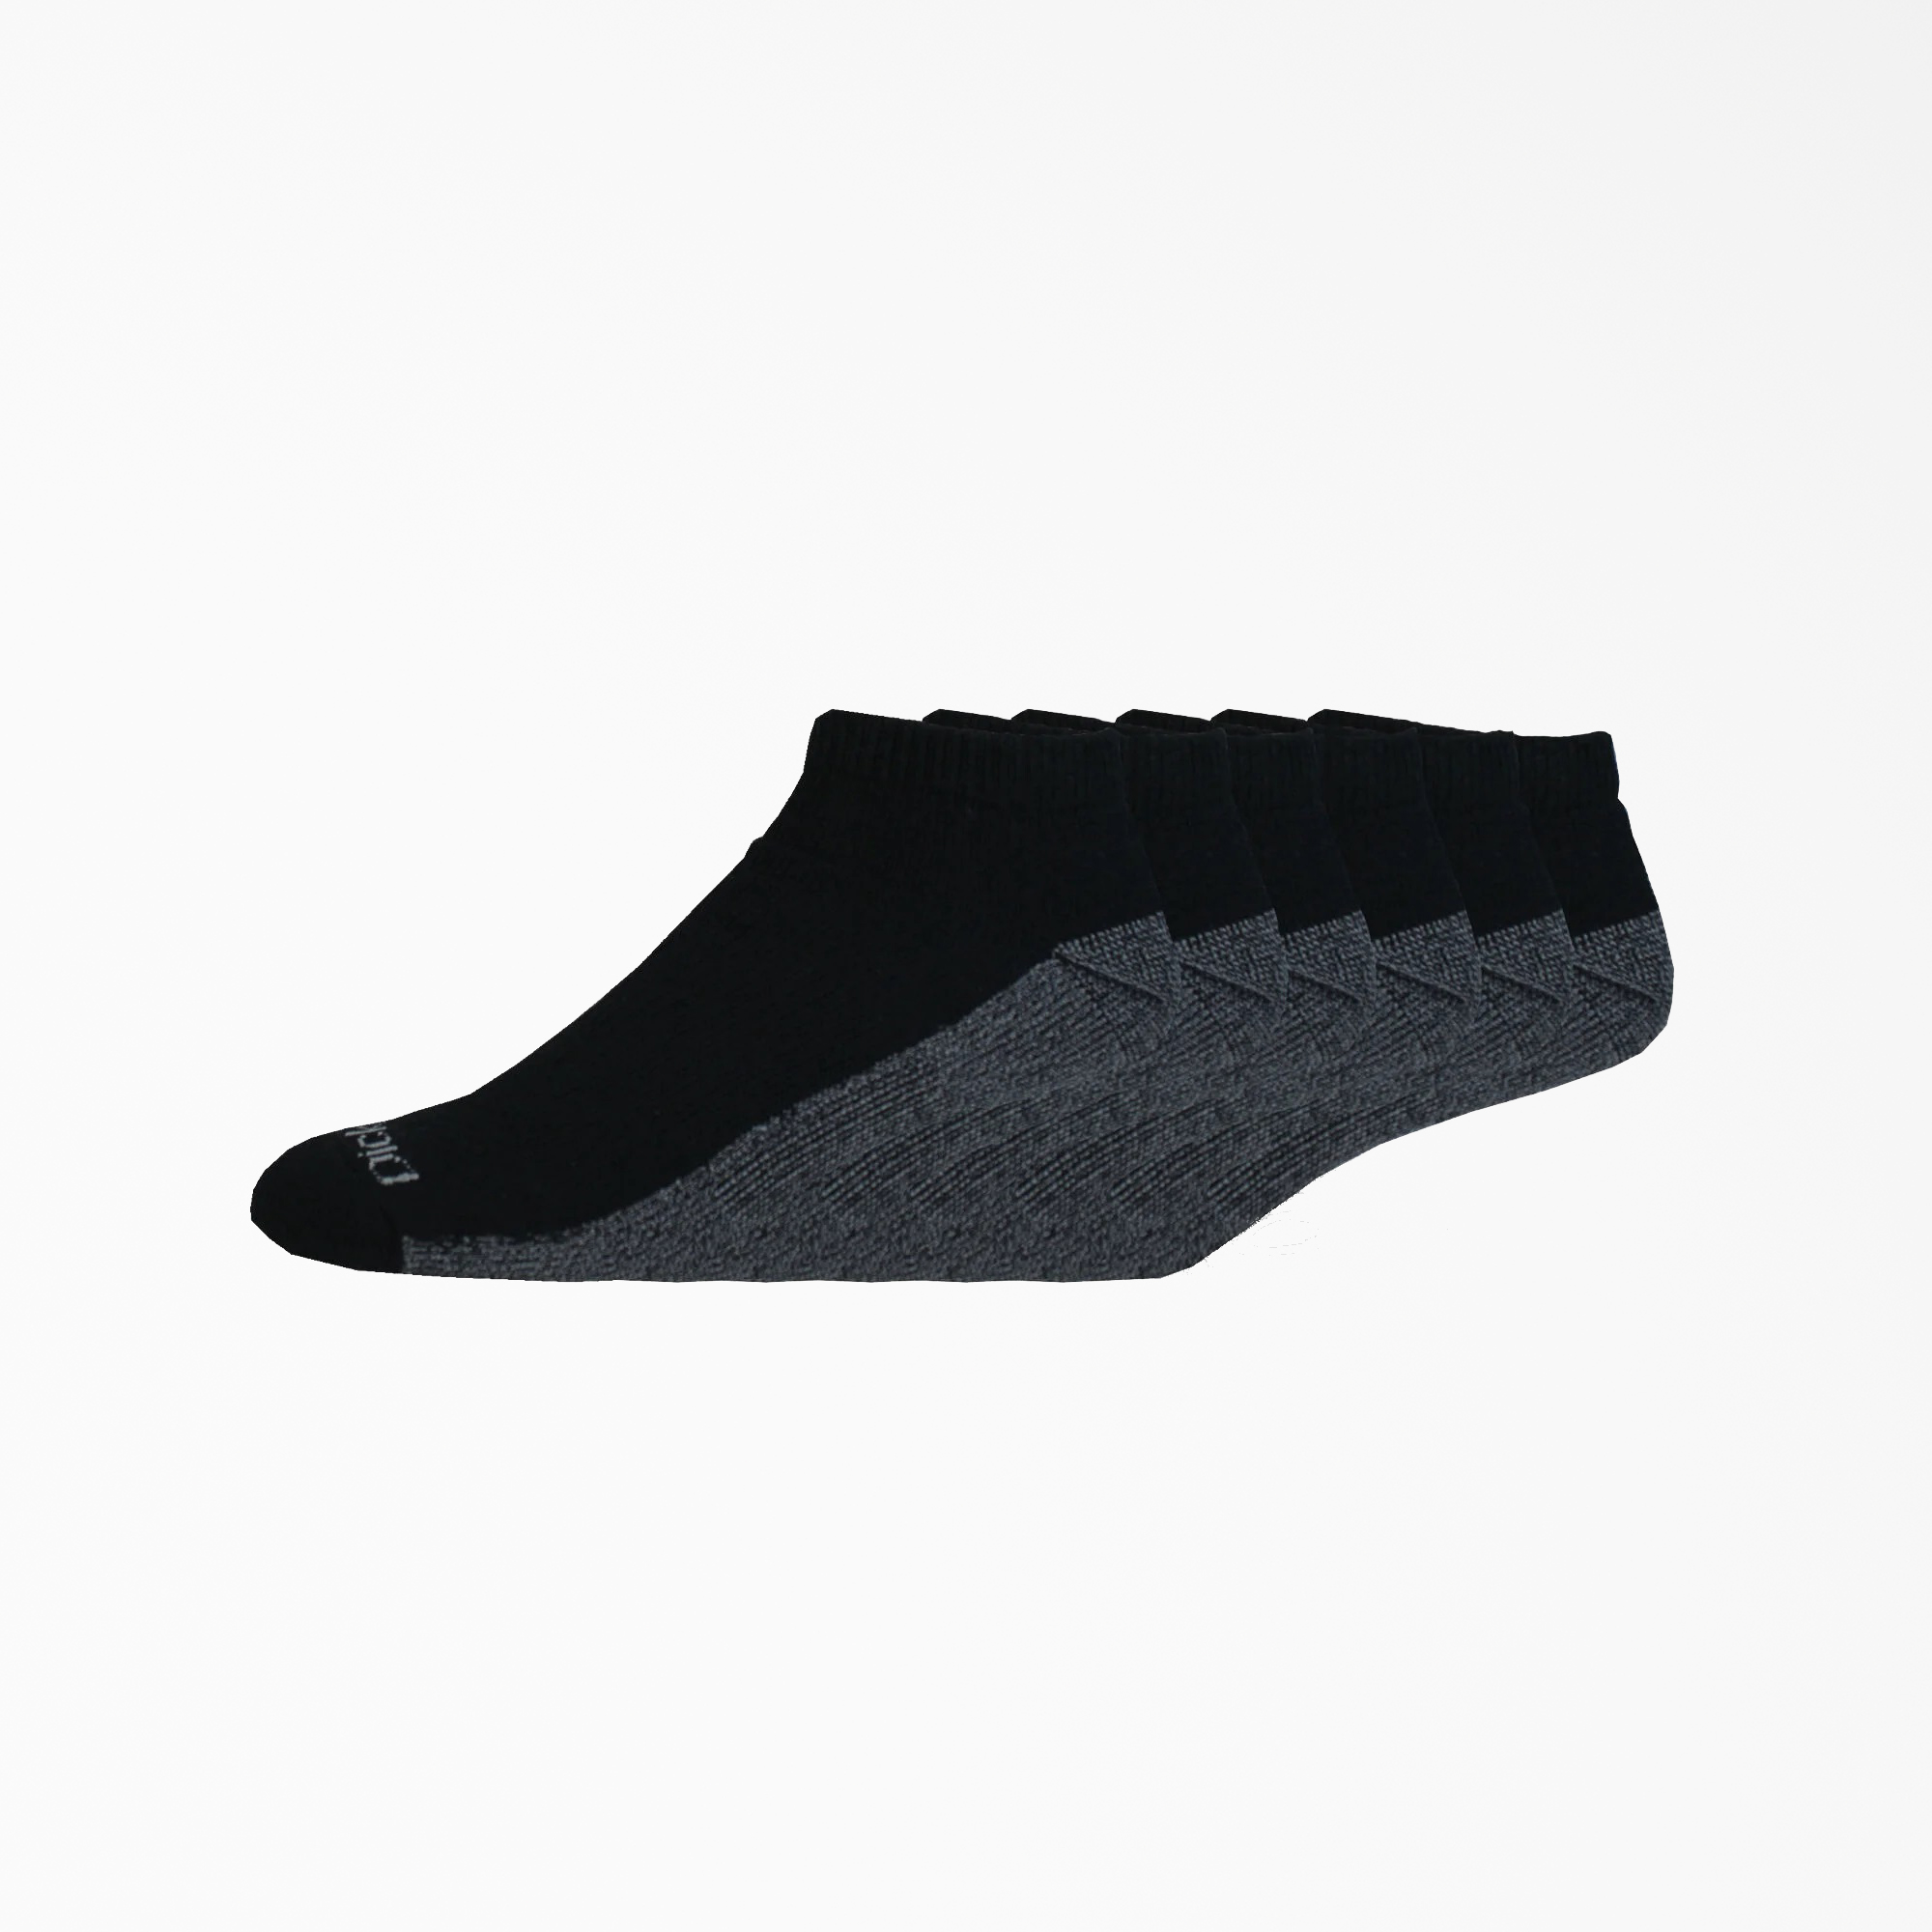 Moisture Control No Show Socks, 6-Pack - Black (BK)